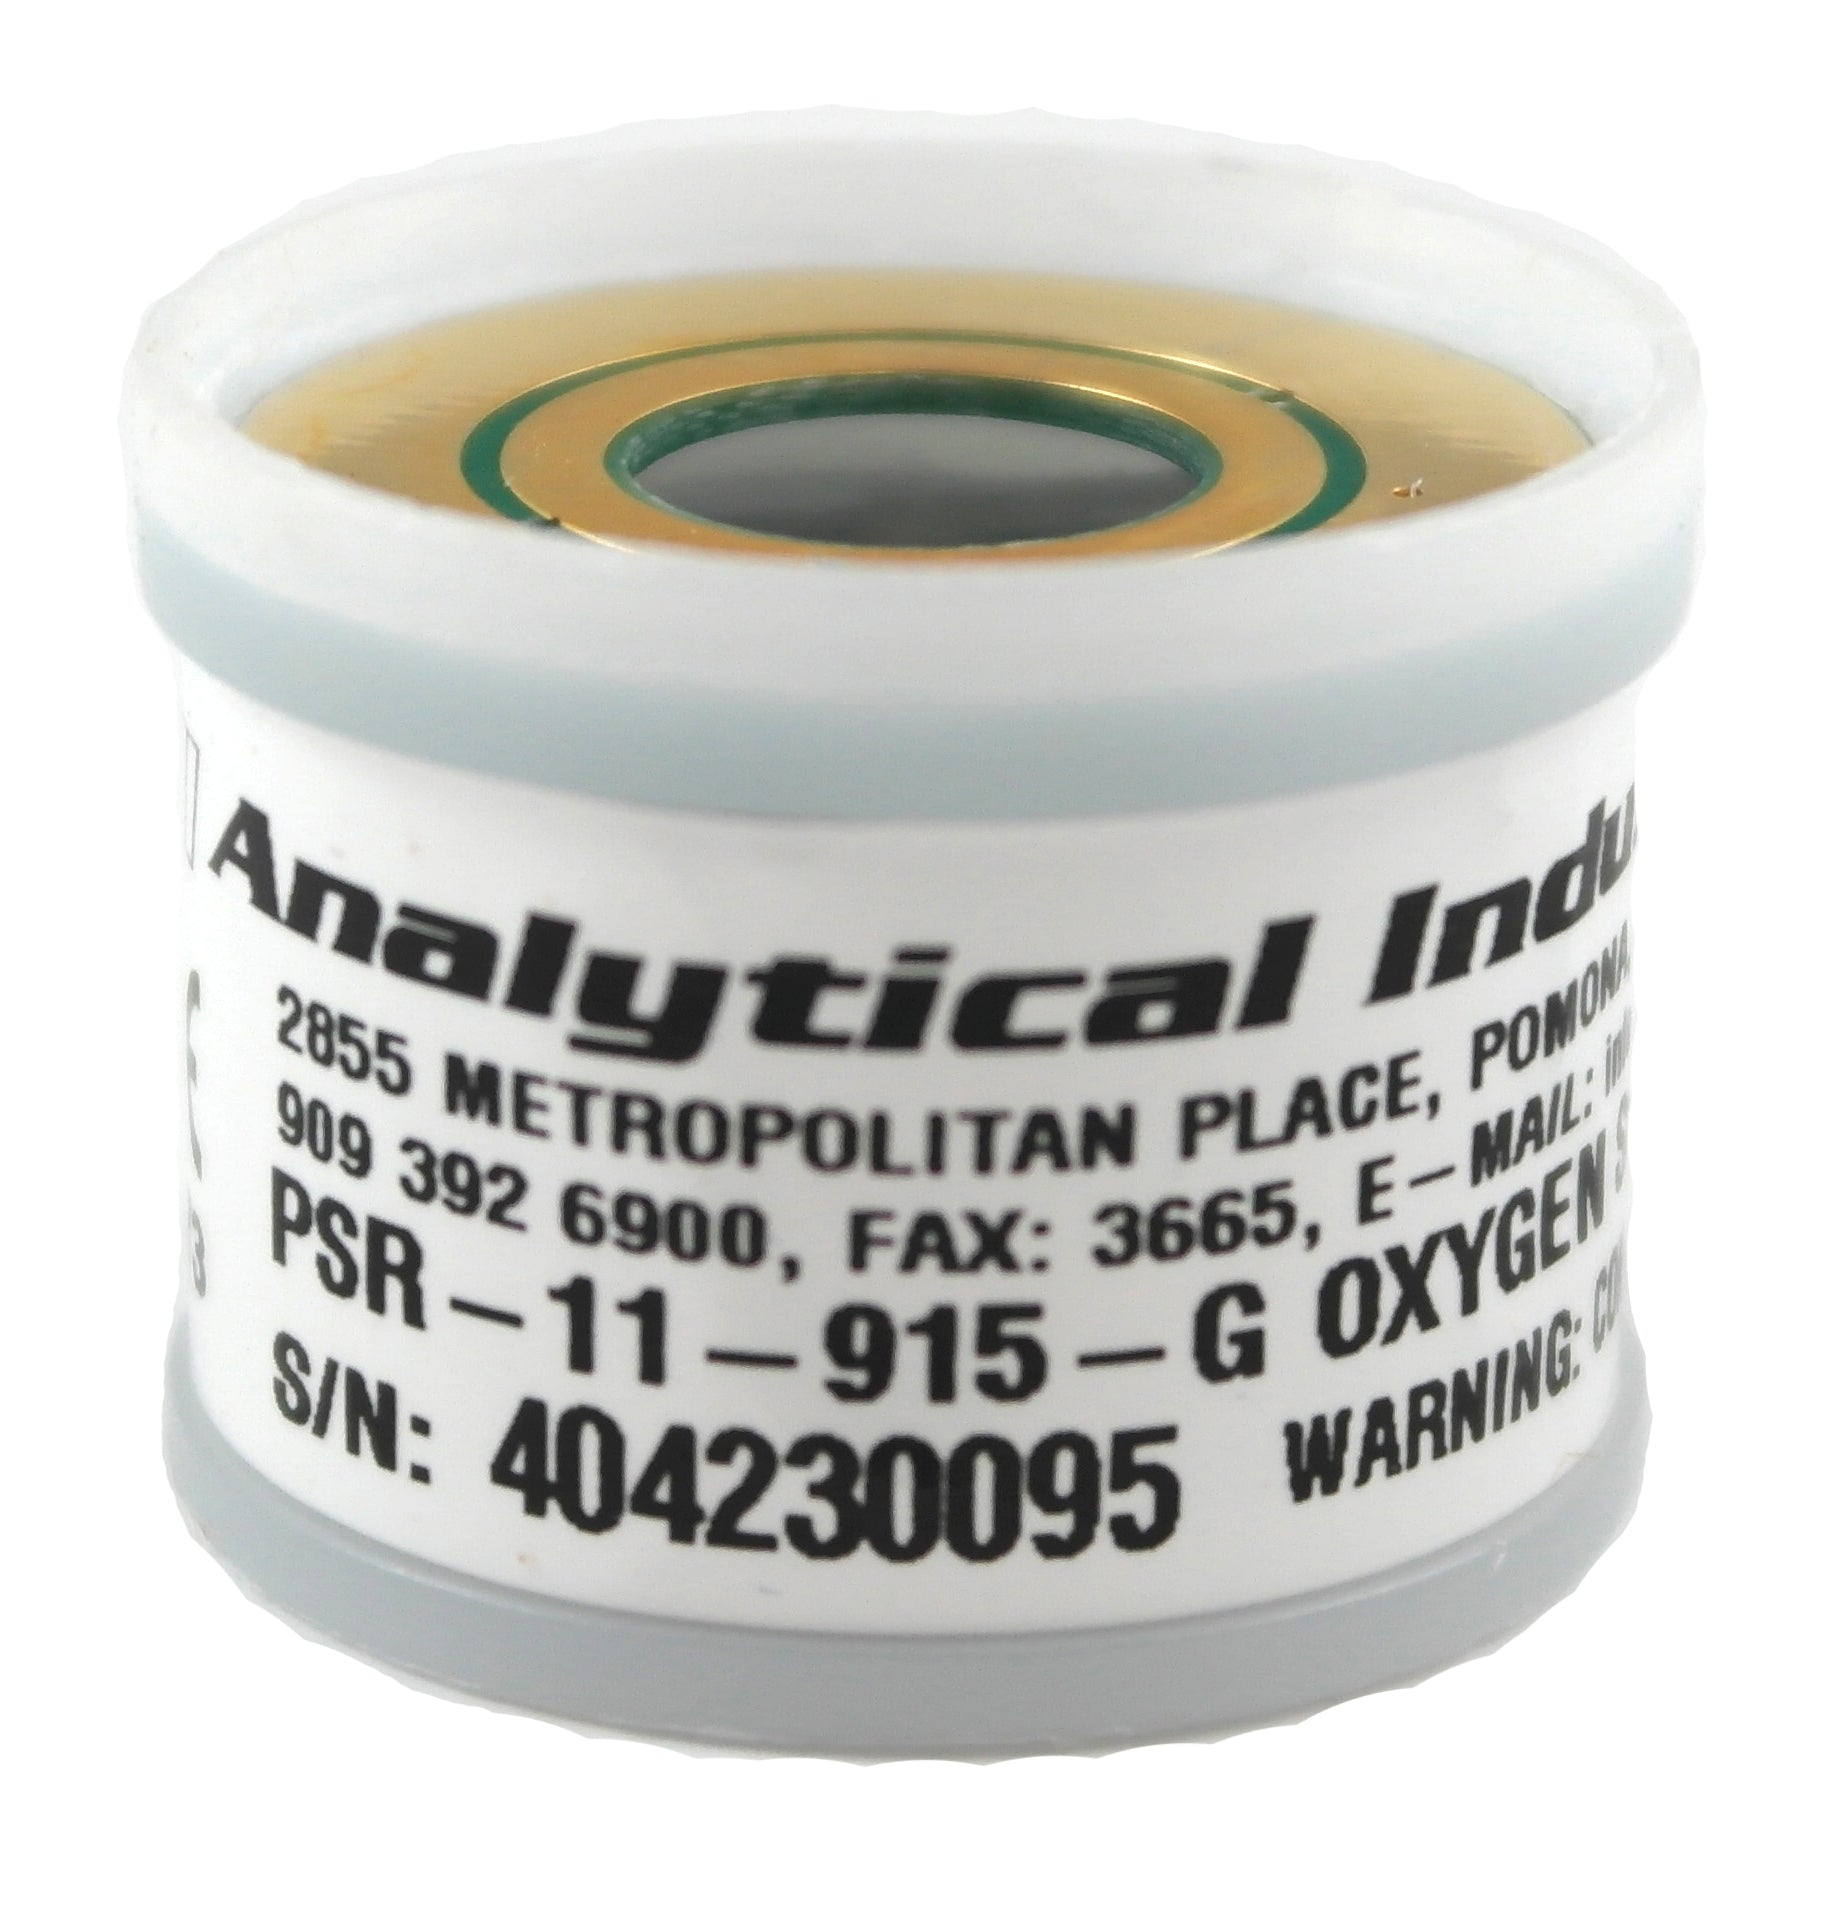 Analytical Industries PSR-11-915-G Oxygen Sensor (Pair)